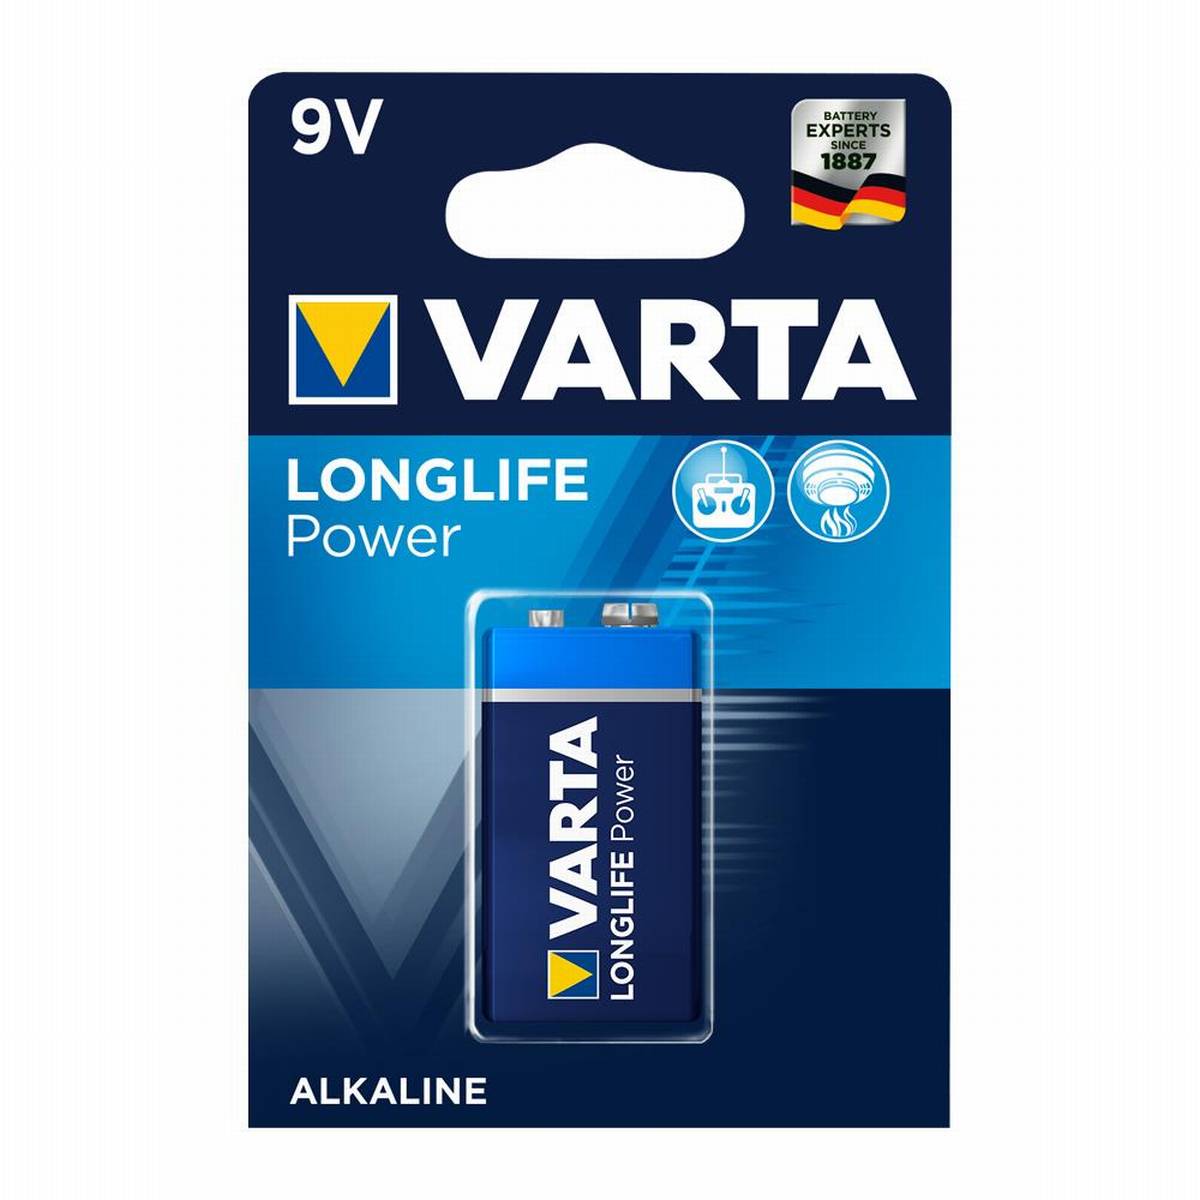 Varta Longlife Power 9V Block Battery 4922 6LR61 (1 blister)